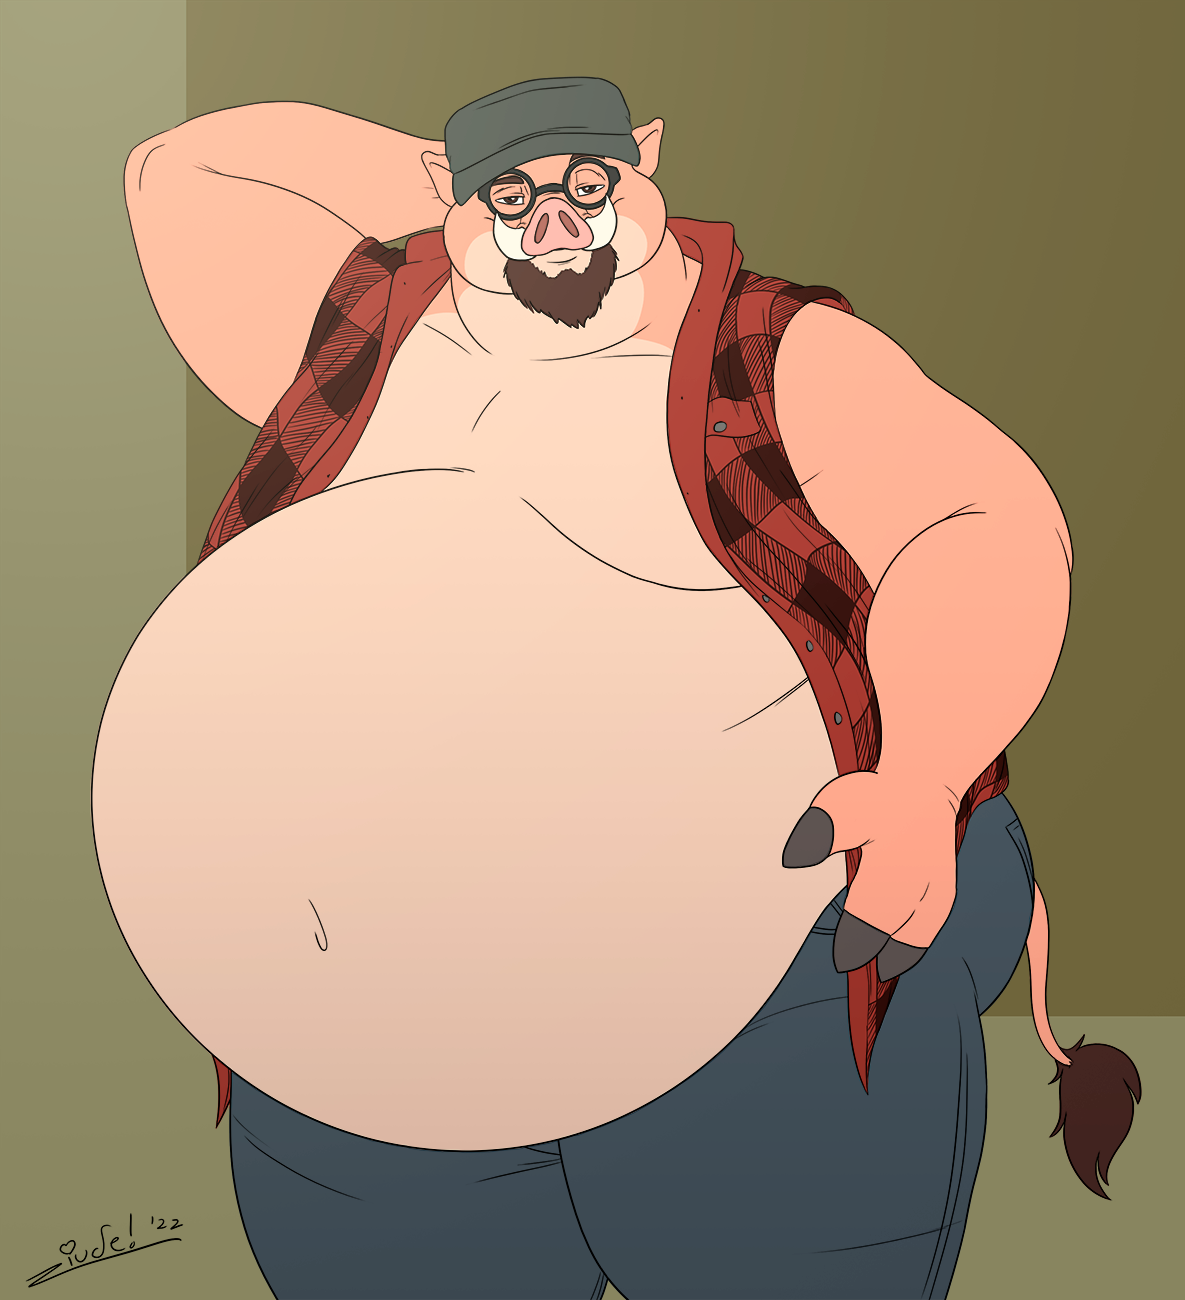 Fat dude by Jacco de Jager on Dribbble